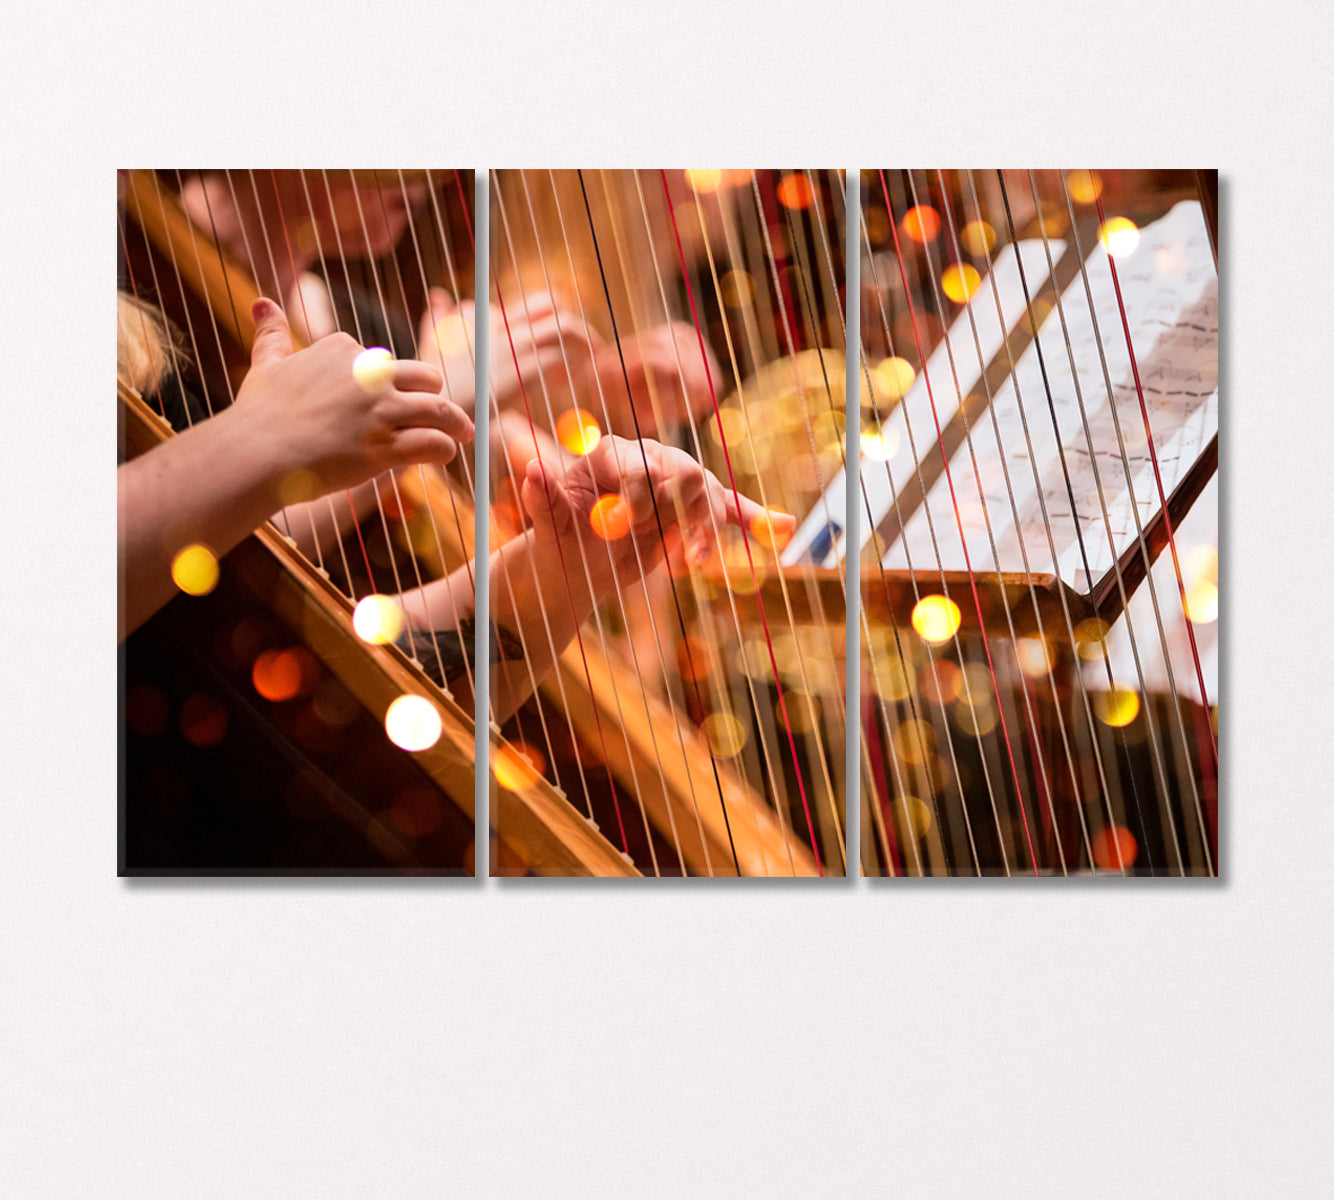 Playing the Harp Close Up Canvas Print-Canvas Print-CetArt-3 Panels-36x24 inches-CetArt